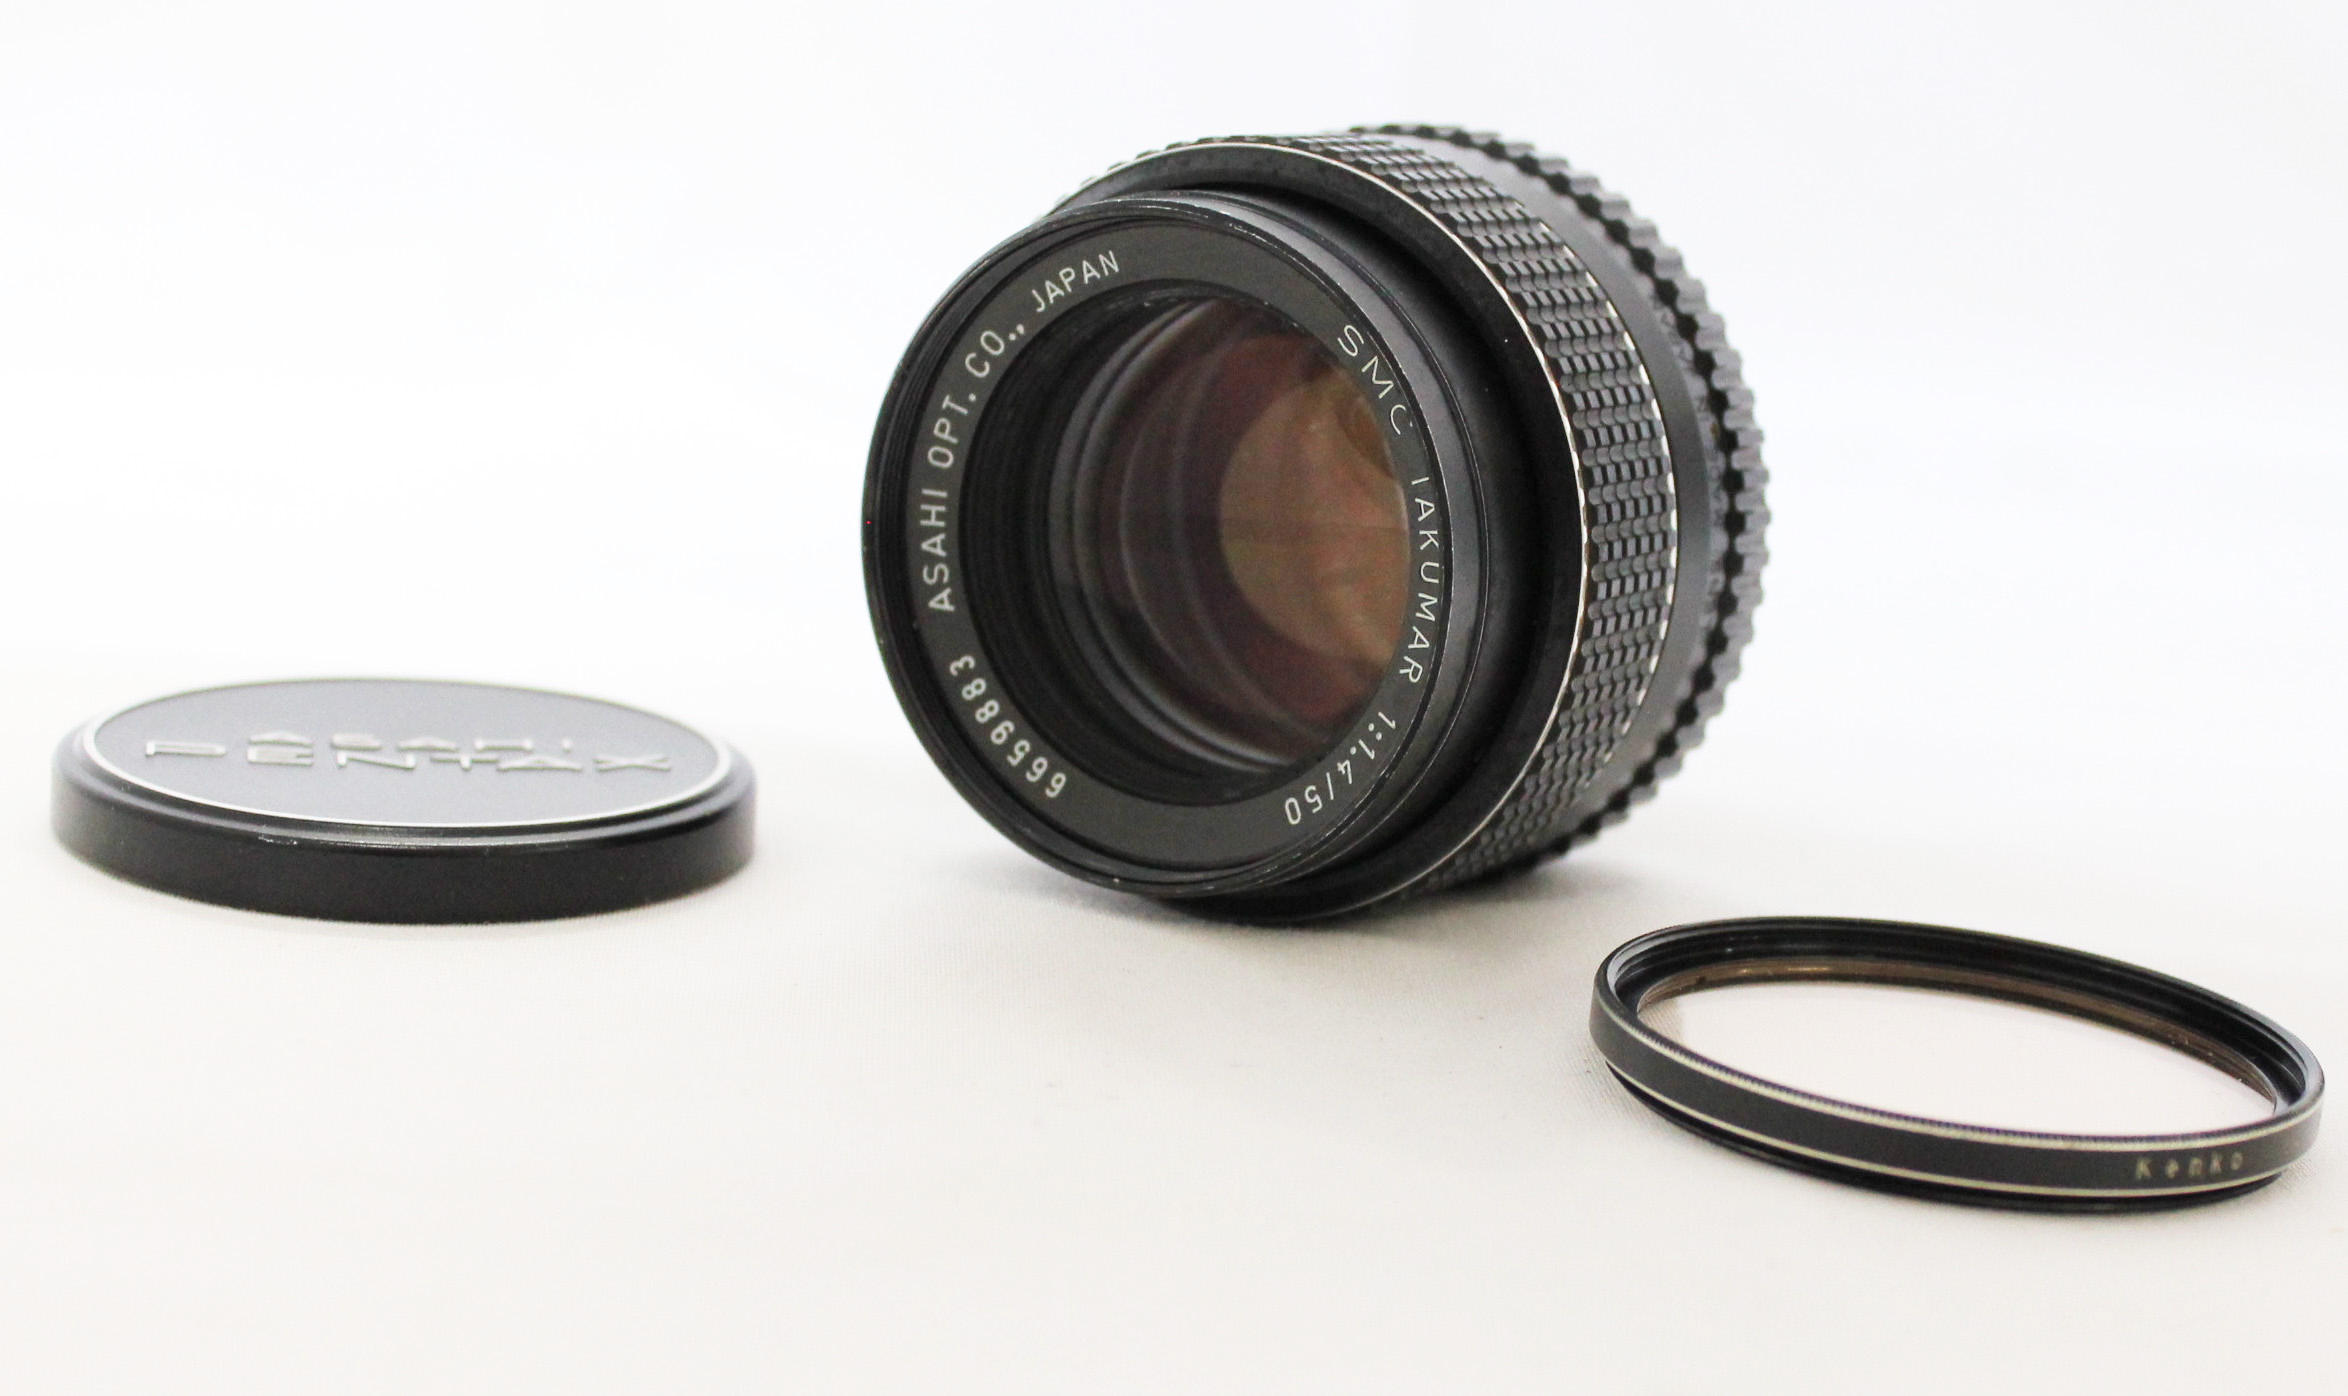 Japan Used Camera Shop | [Exc++] Asahi Pentax SMC Takumar 50mm F/1.4 Lens M42 Mount from Japan